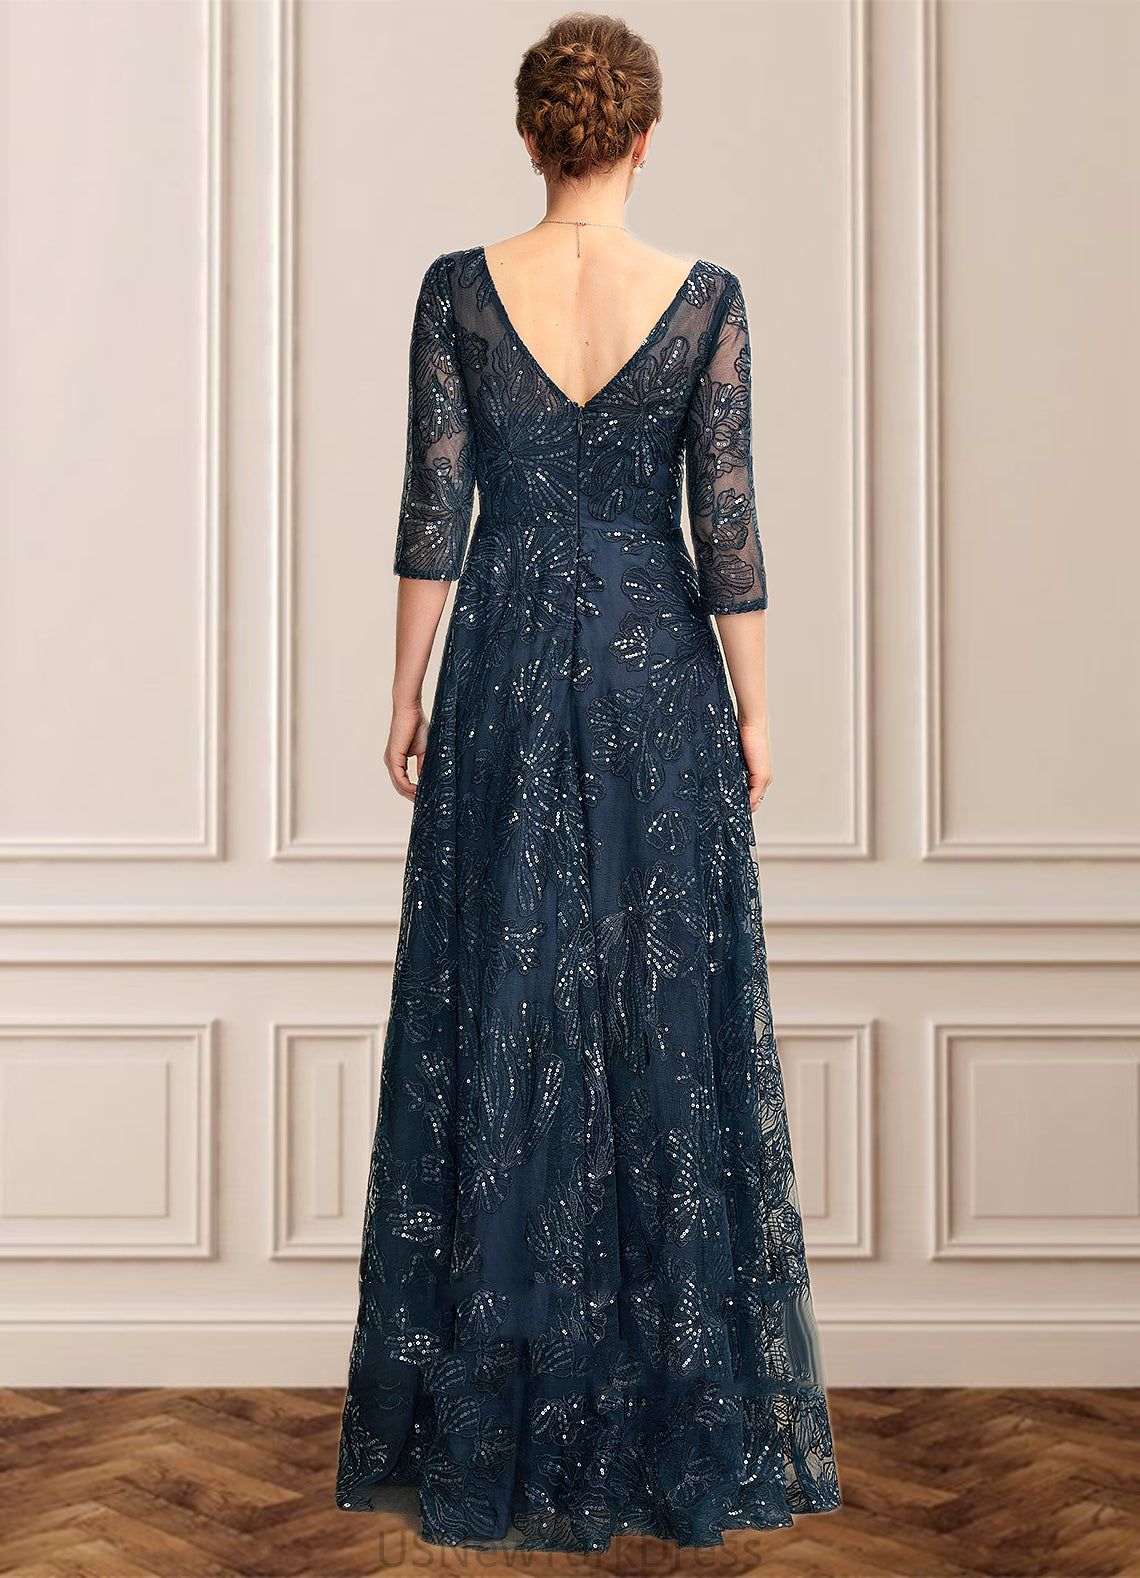 Delaney A-Line V-neck Floor-Length Lace Mother of the Bride Dress With Sequins DJ126P0015015